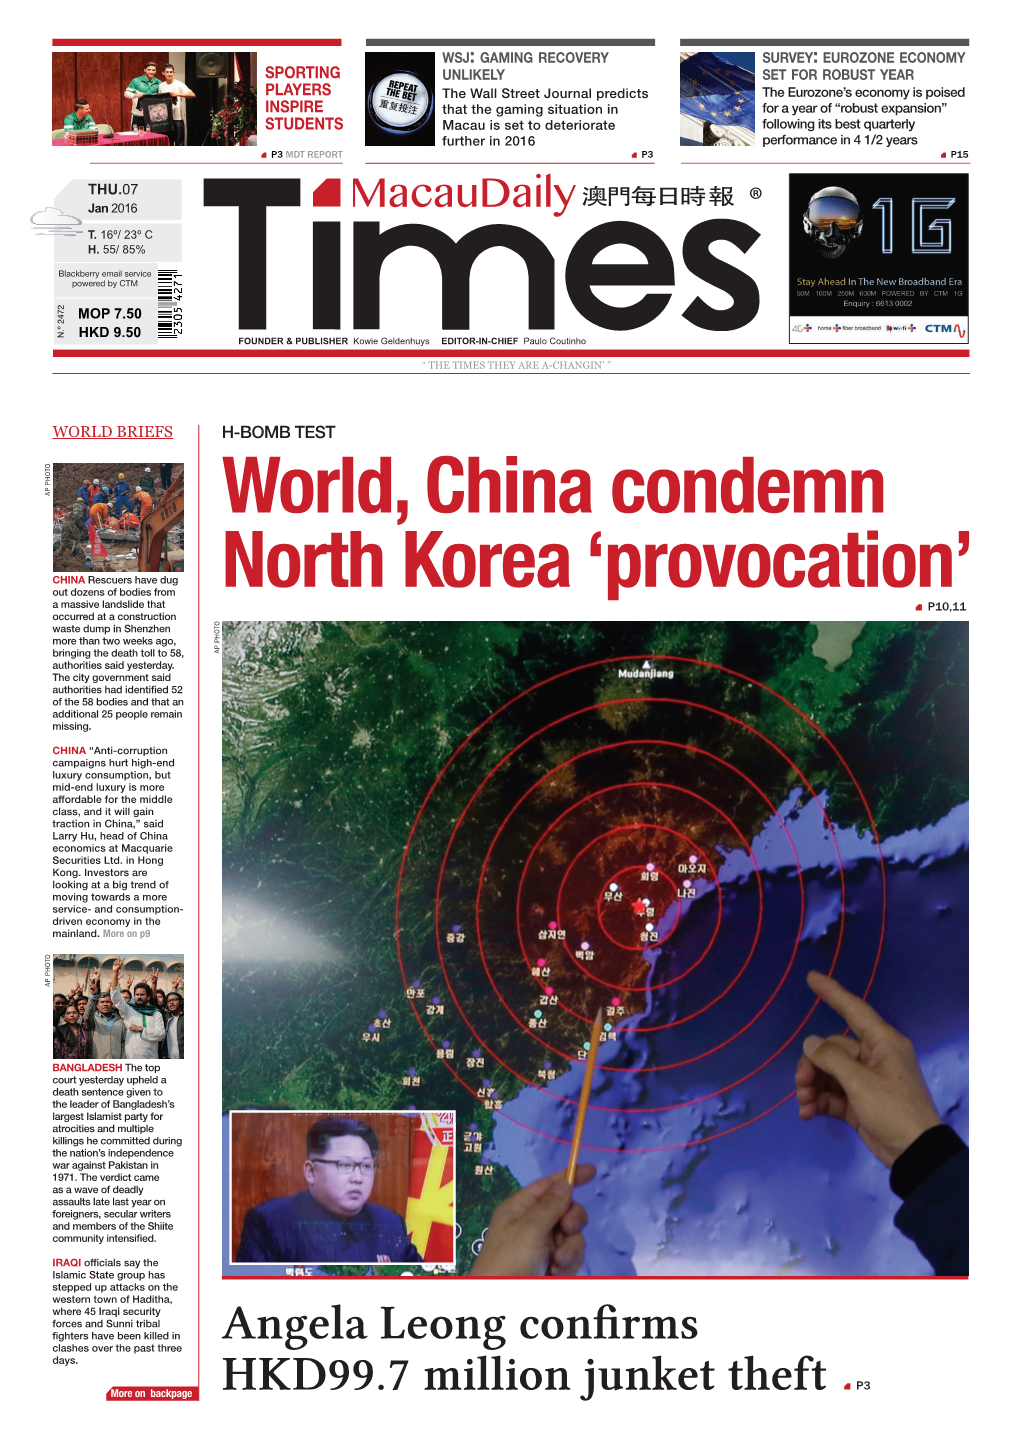 World, China Condemn North Korea 'Provocation' P10,11